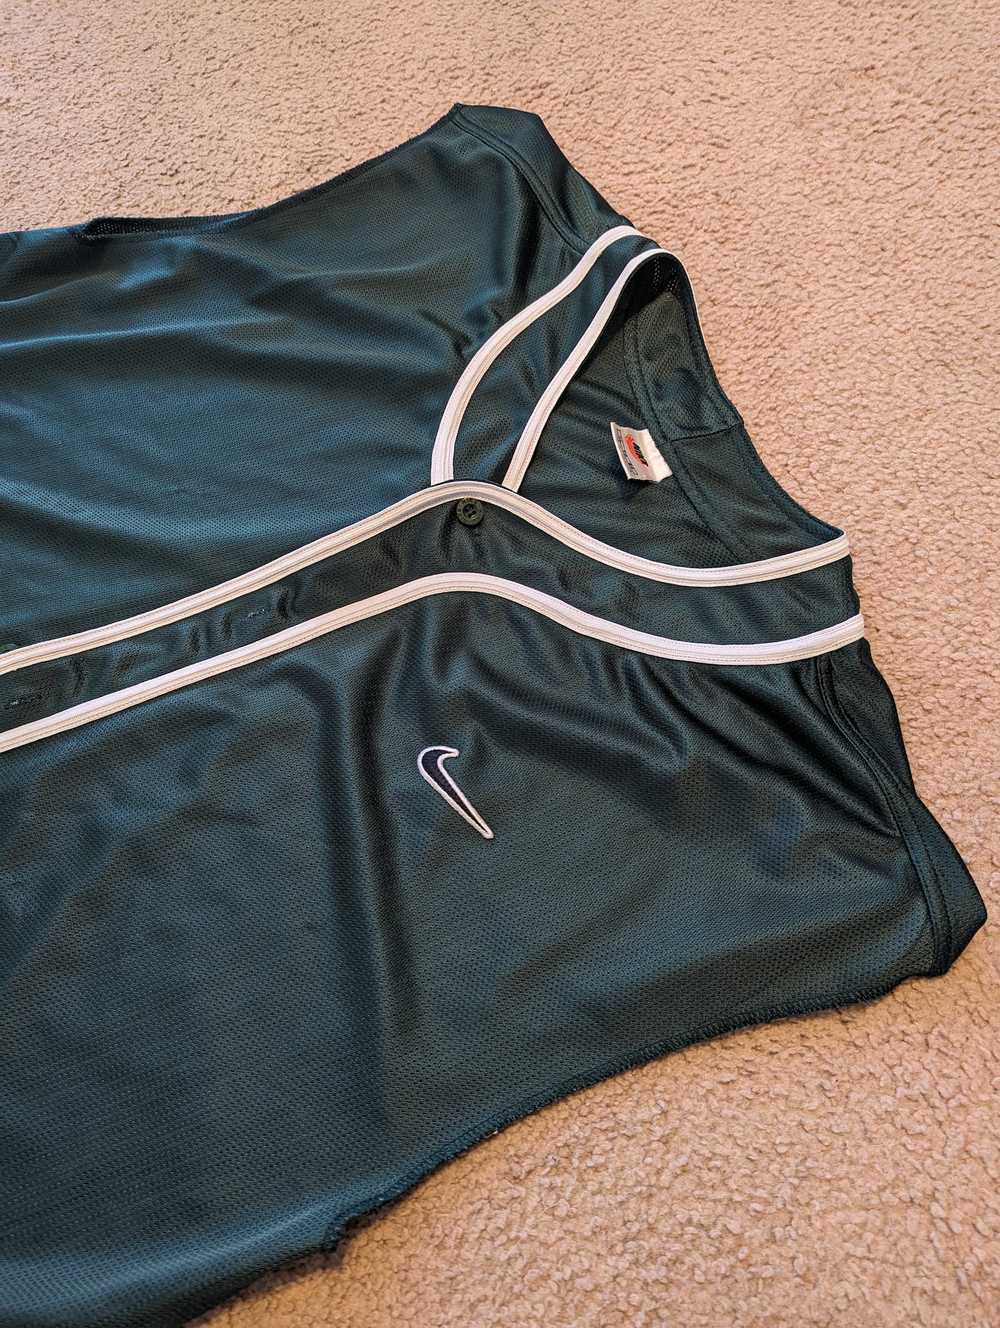 Nike Nike Sleeveless Baseball Jersey - image 3